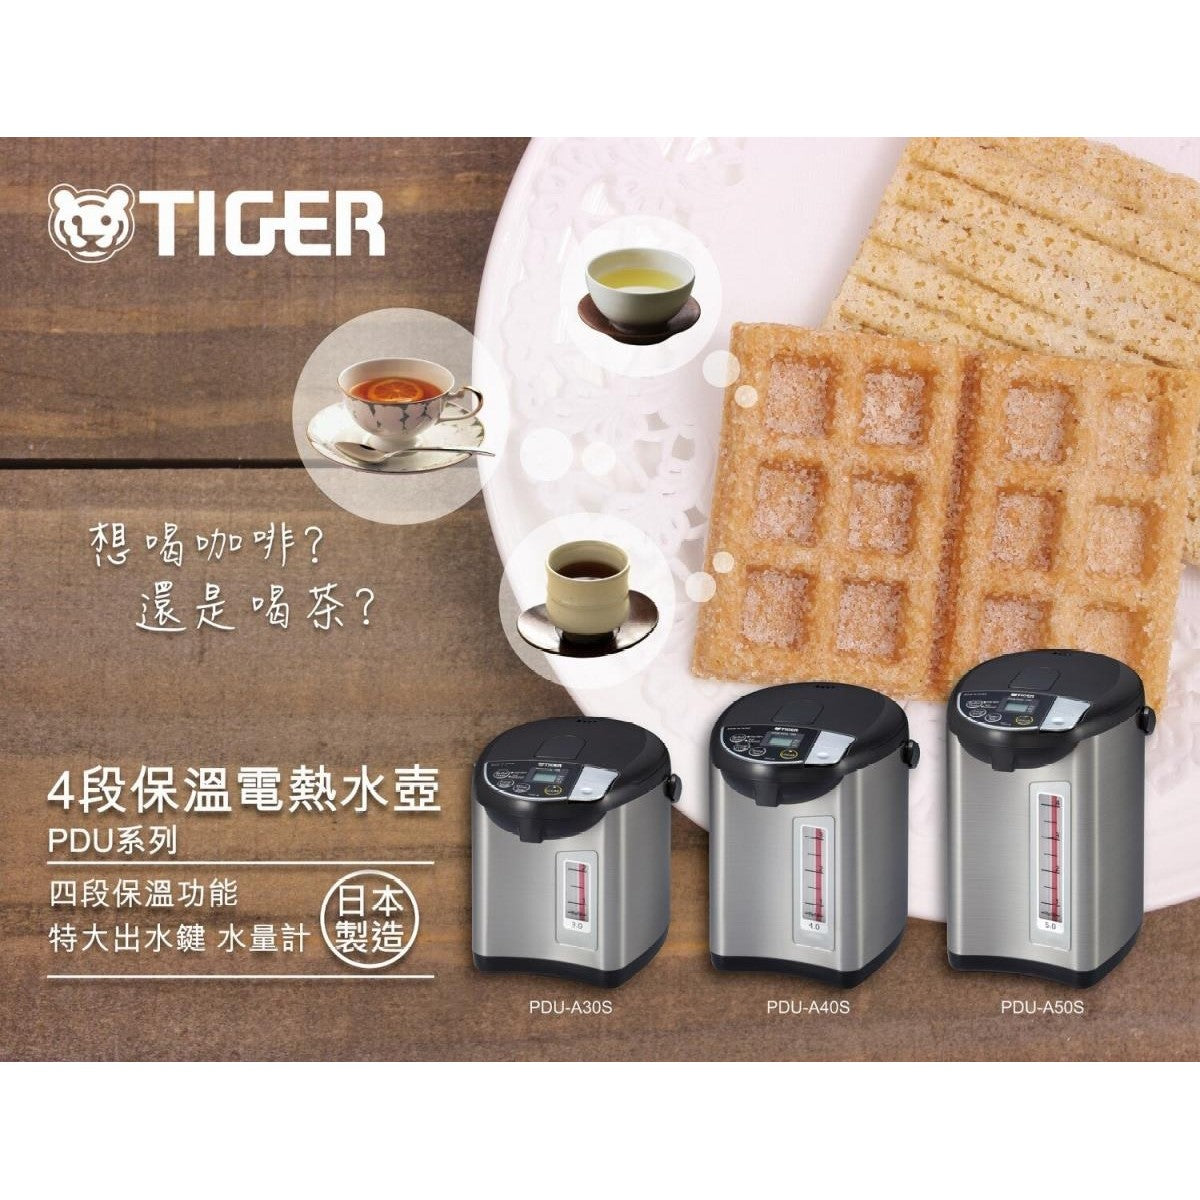 Tiger Hot Water Dispenser